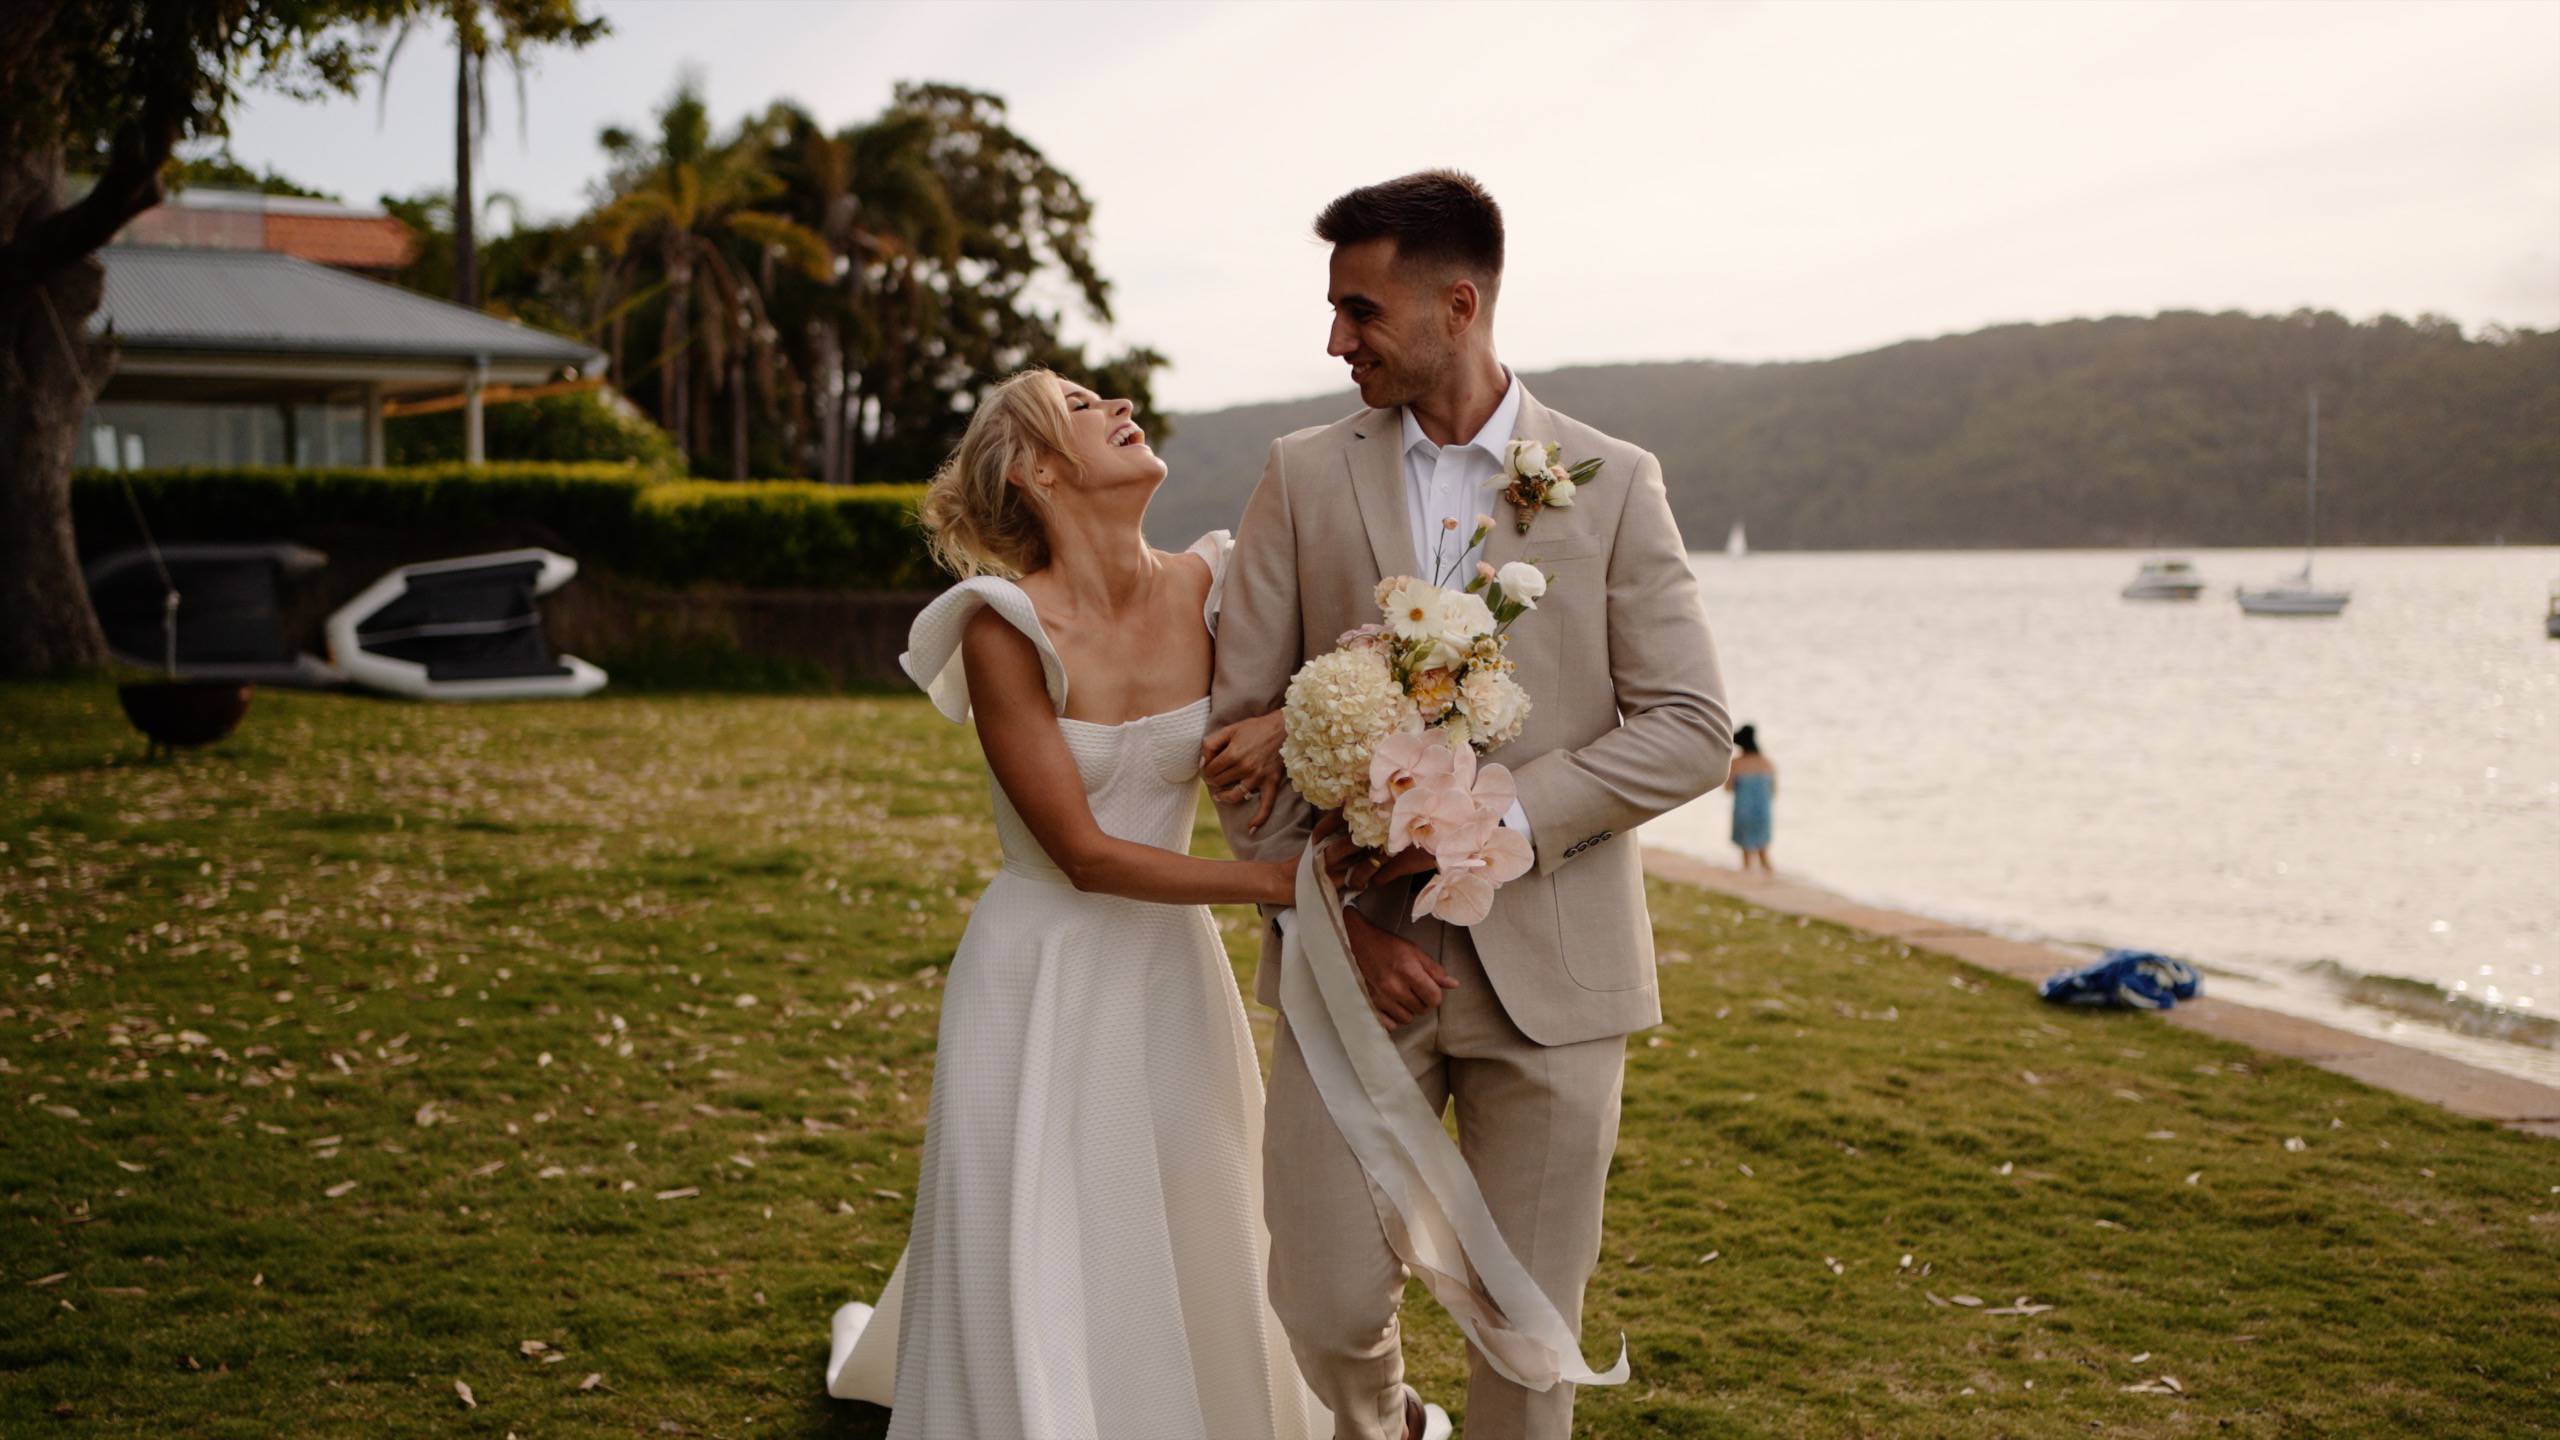 Grace + Jayden Highlight Film // Moby Dicks Whale Beach // Sydney Wedding Videography